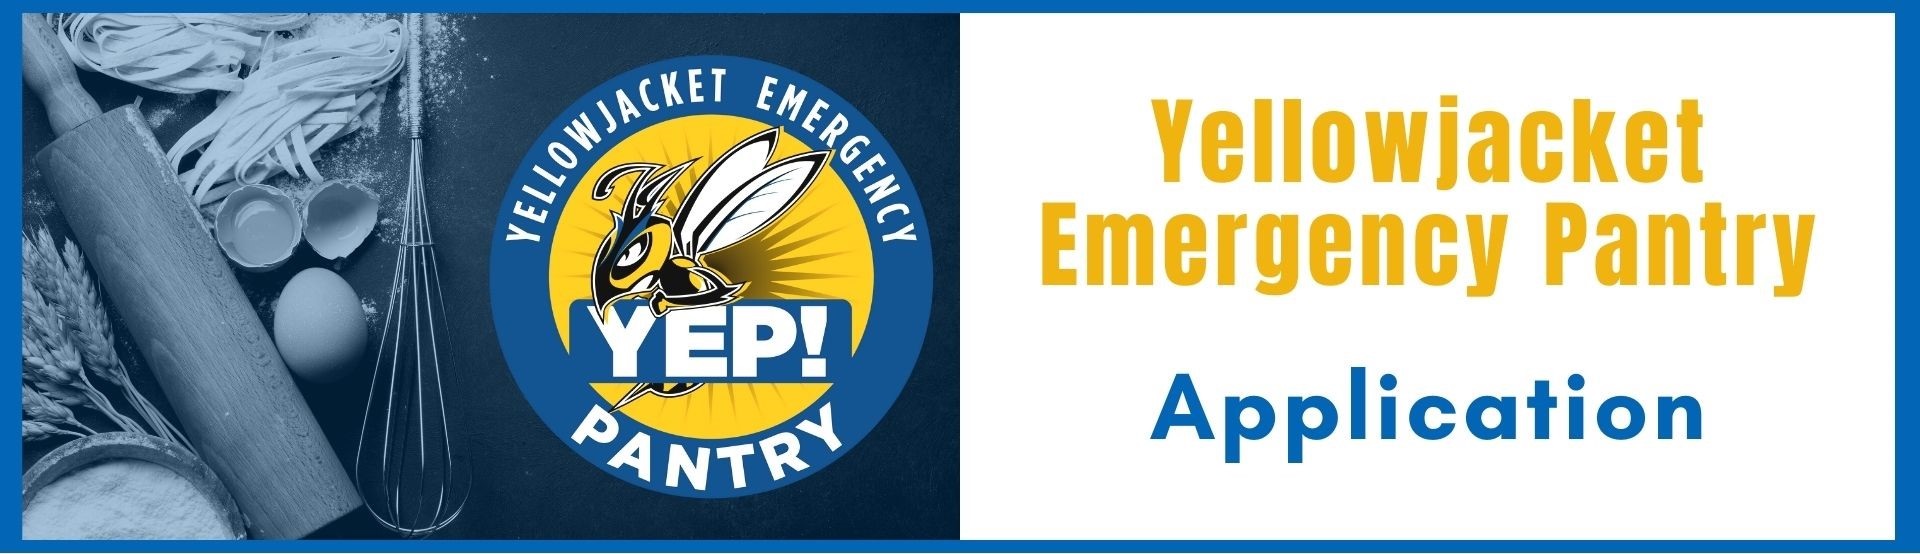 Yellowjacket Emergency Pantry Application